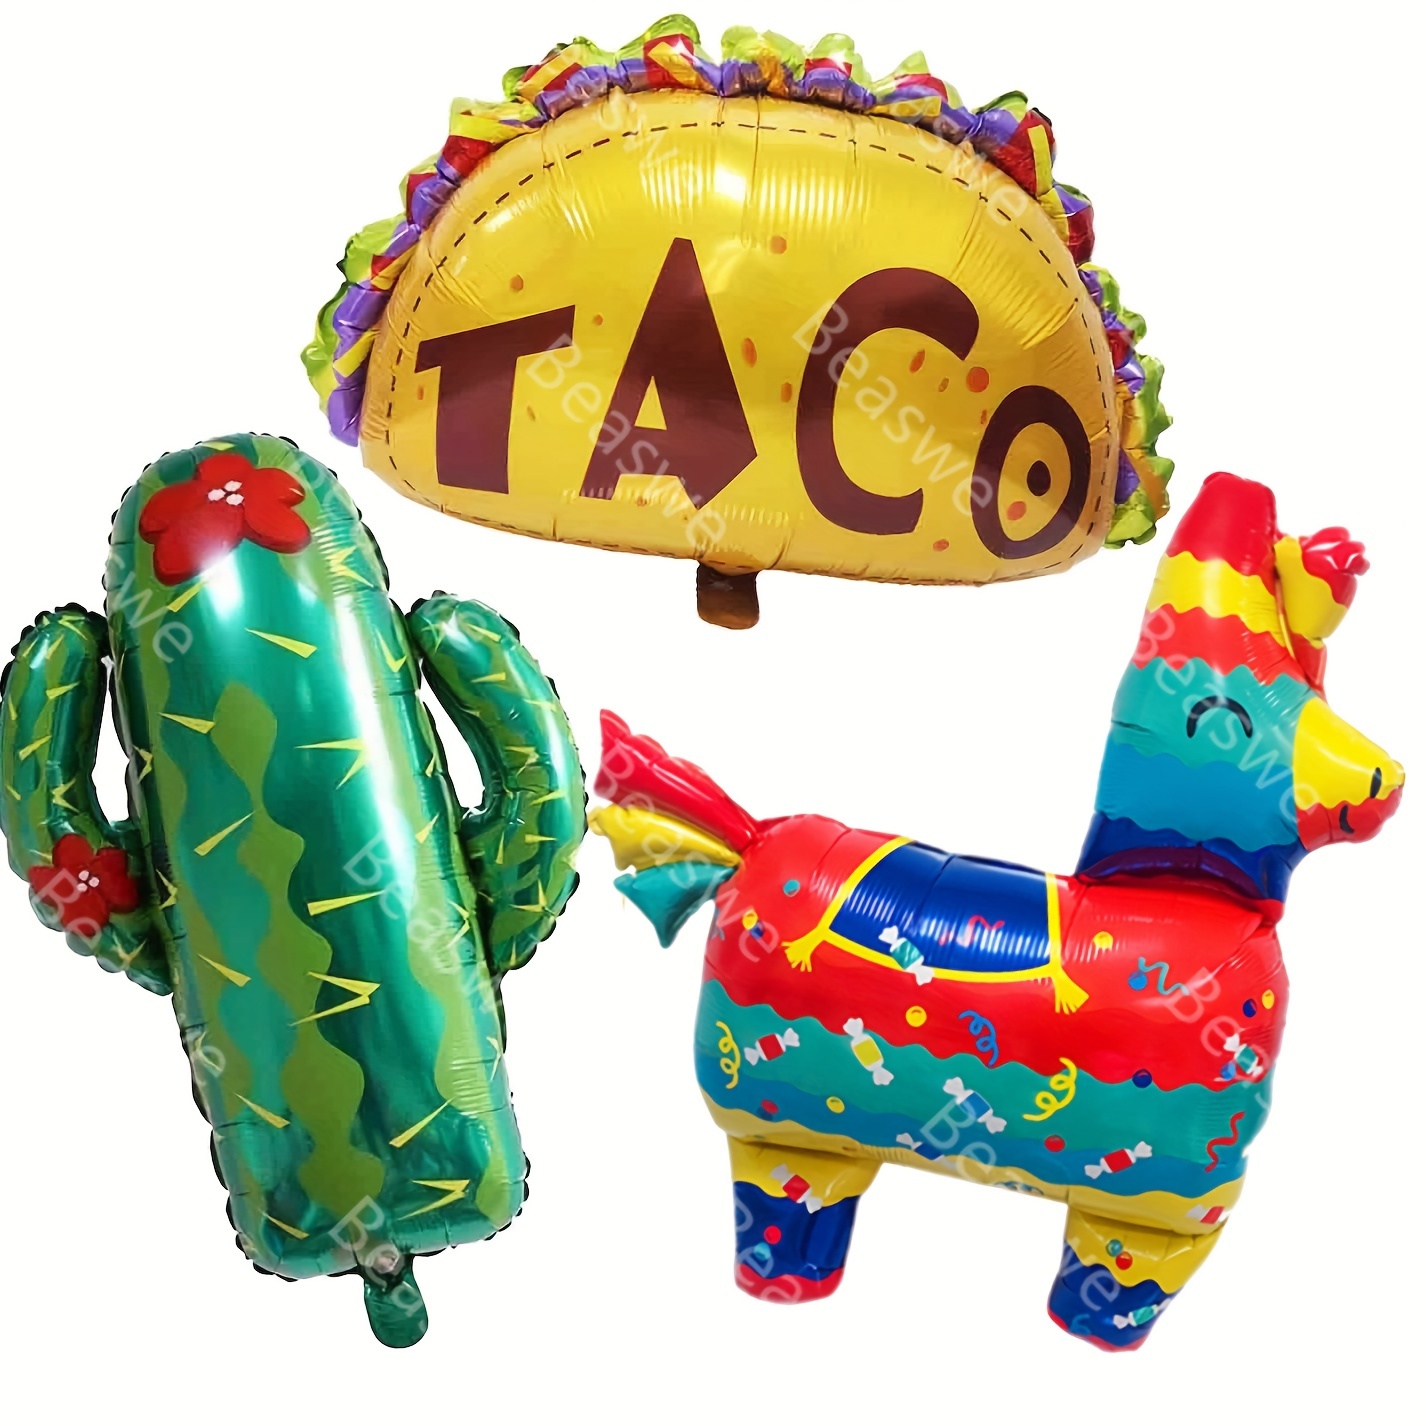 

3pcs/set, Jumbo Taco Llama Cactus Balloon Mexico Fiestathemed Party Supplies Decor Sport Wedding Birthday Party Favors